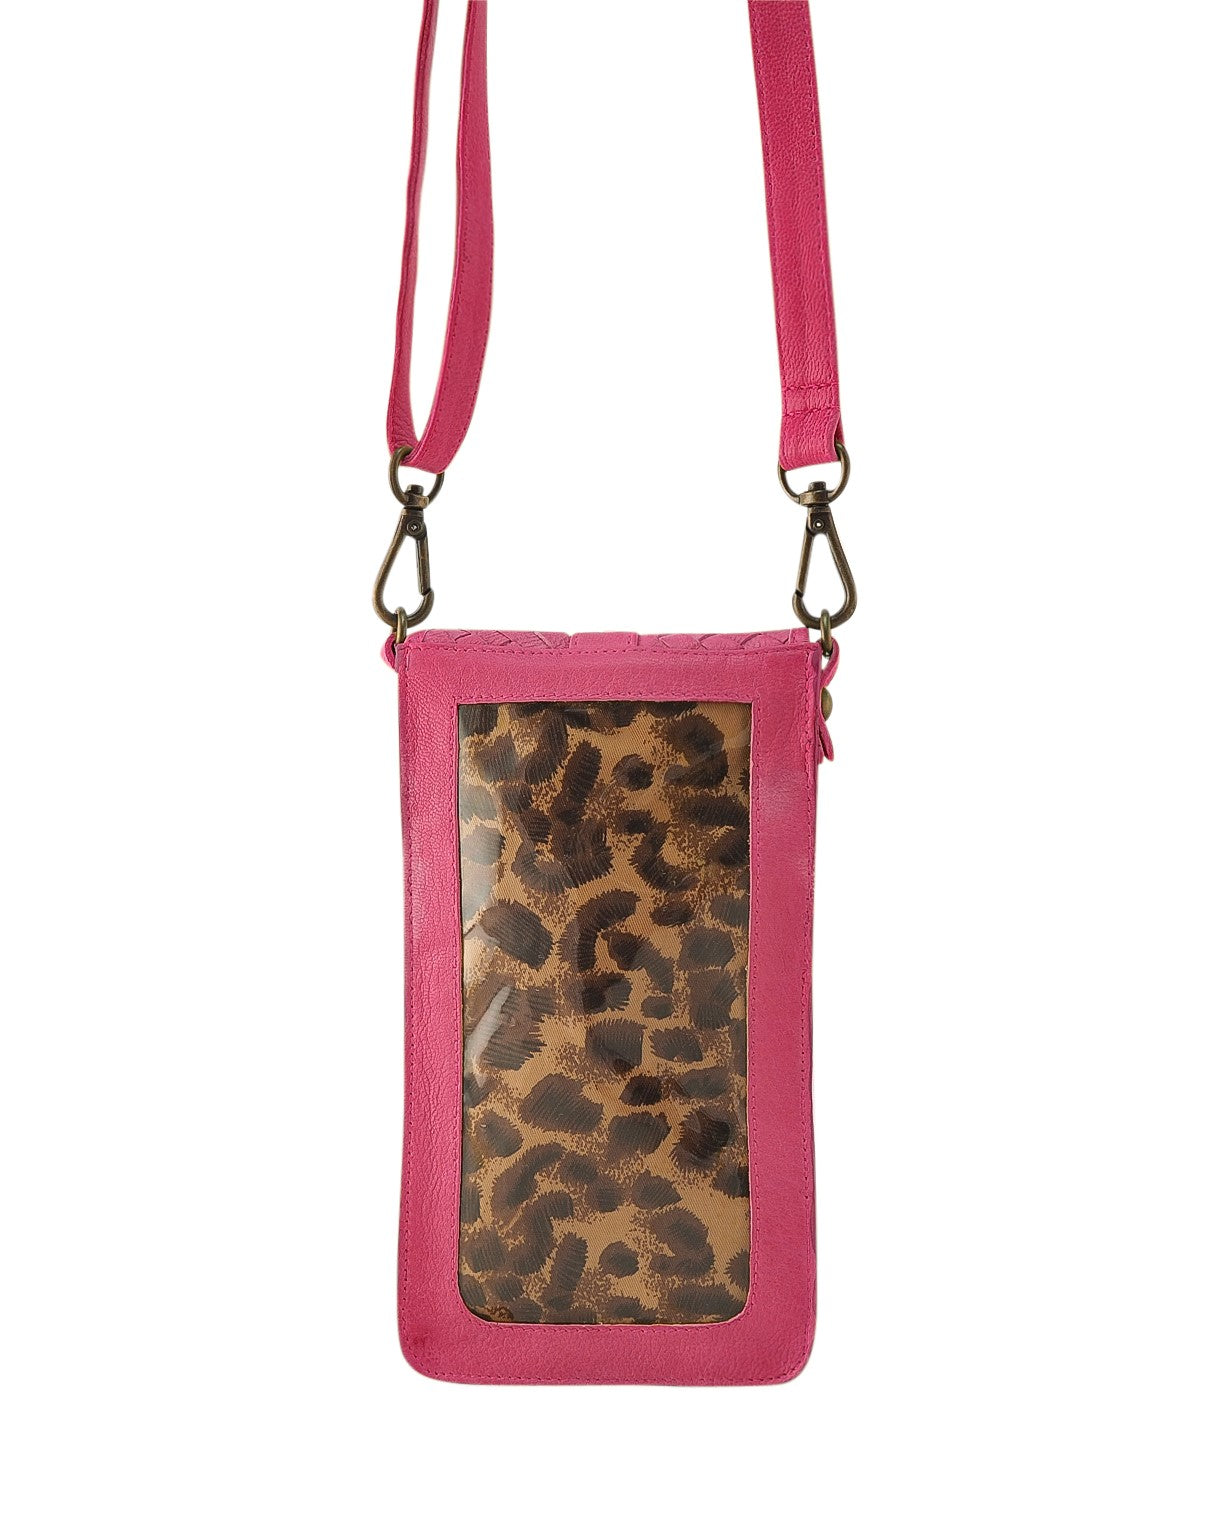 Ada Phone Bag | Fuchsia-Handbags-CadelleLeather